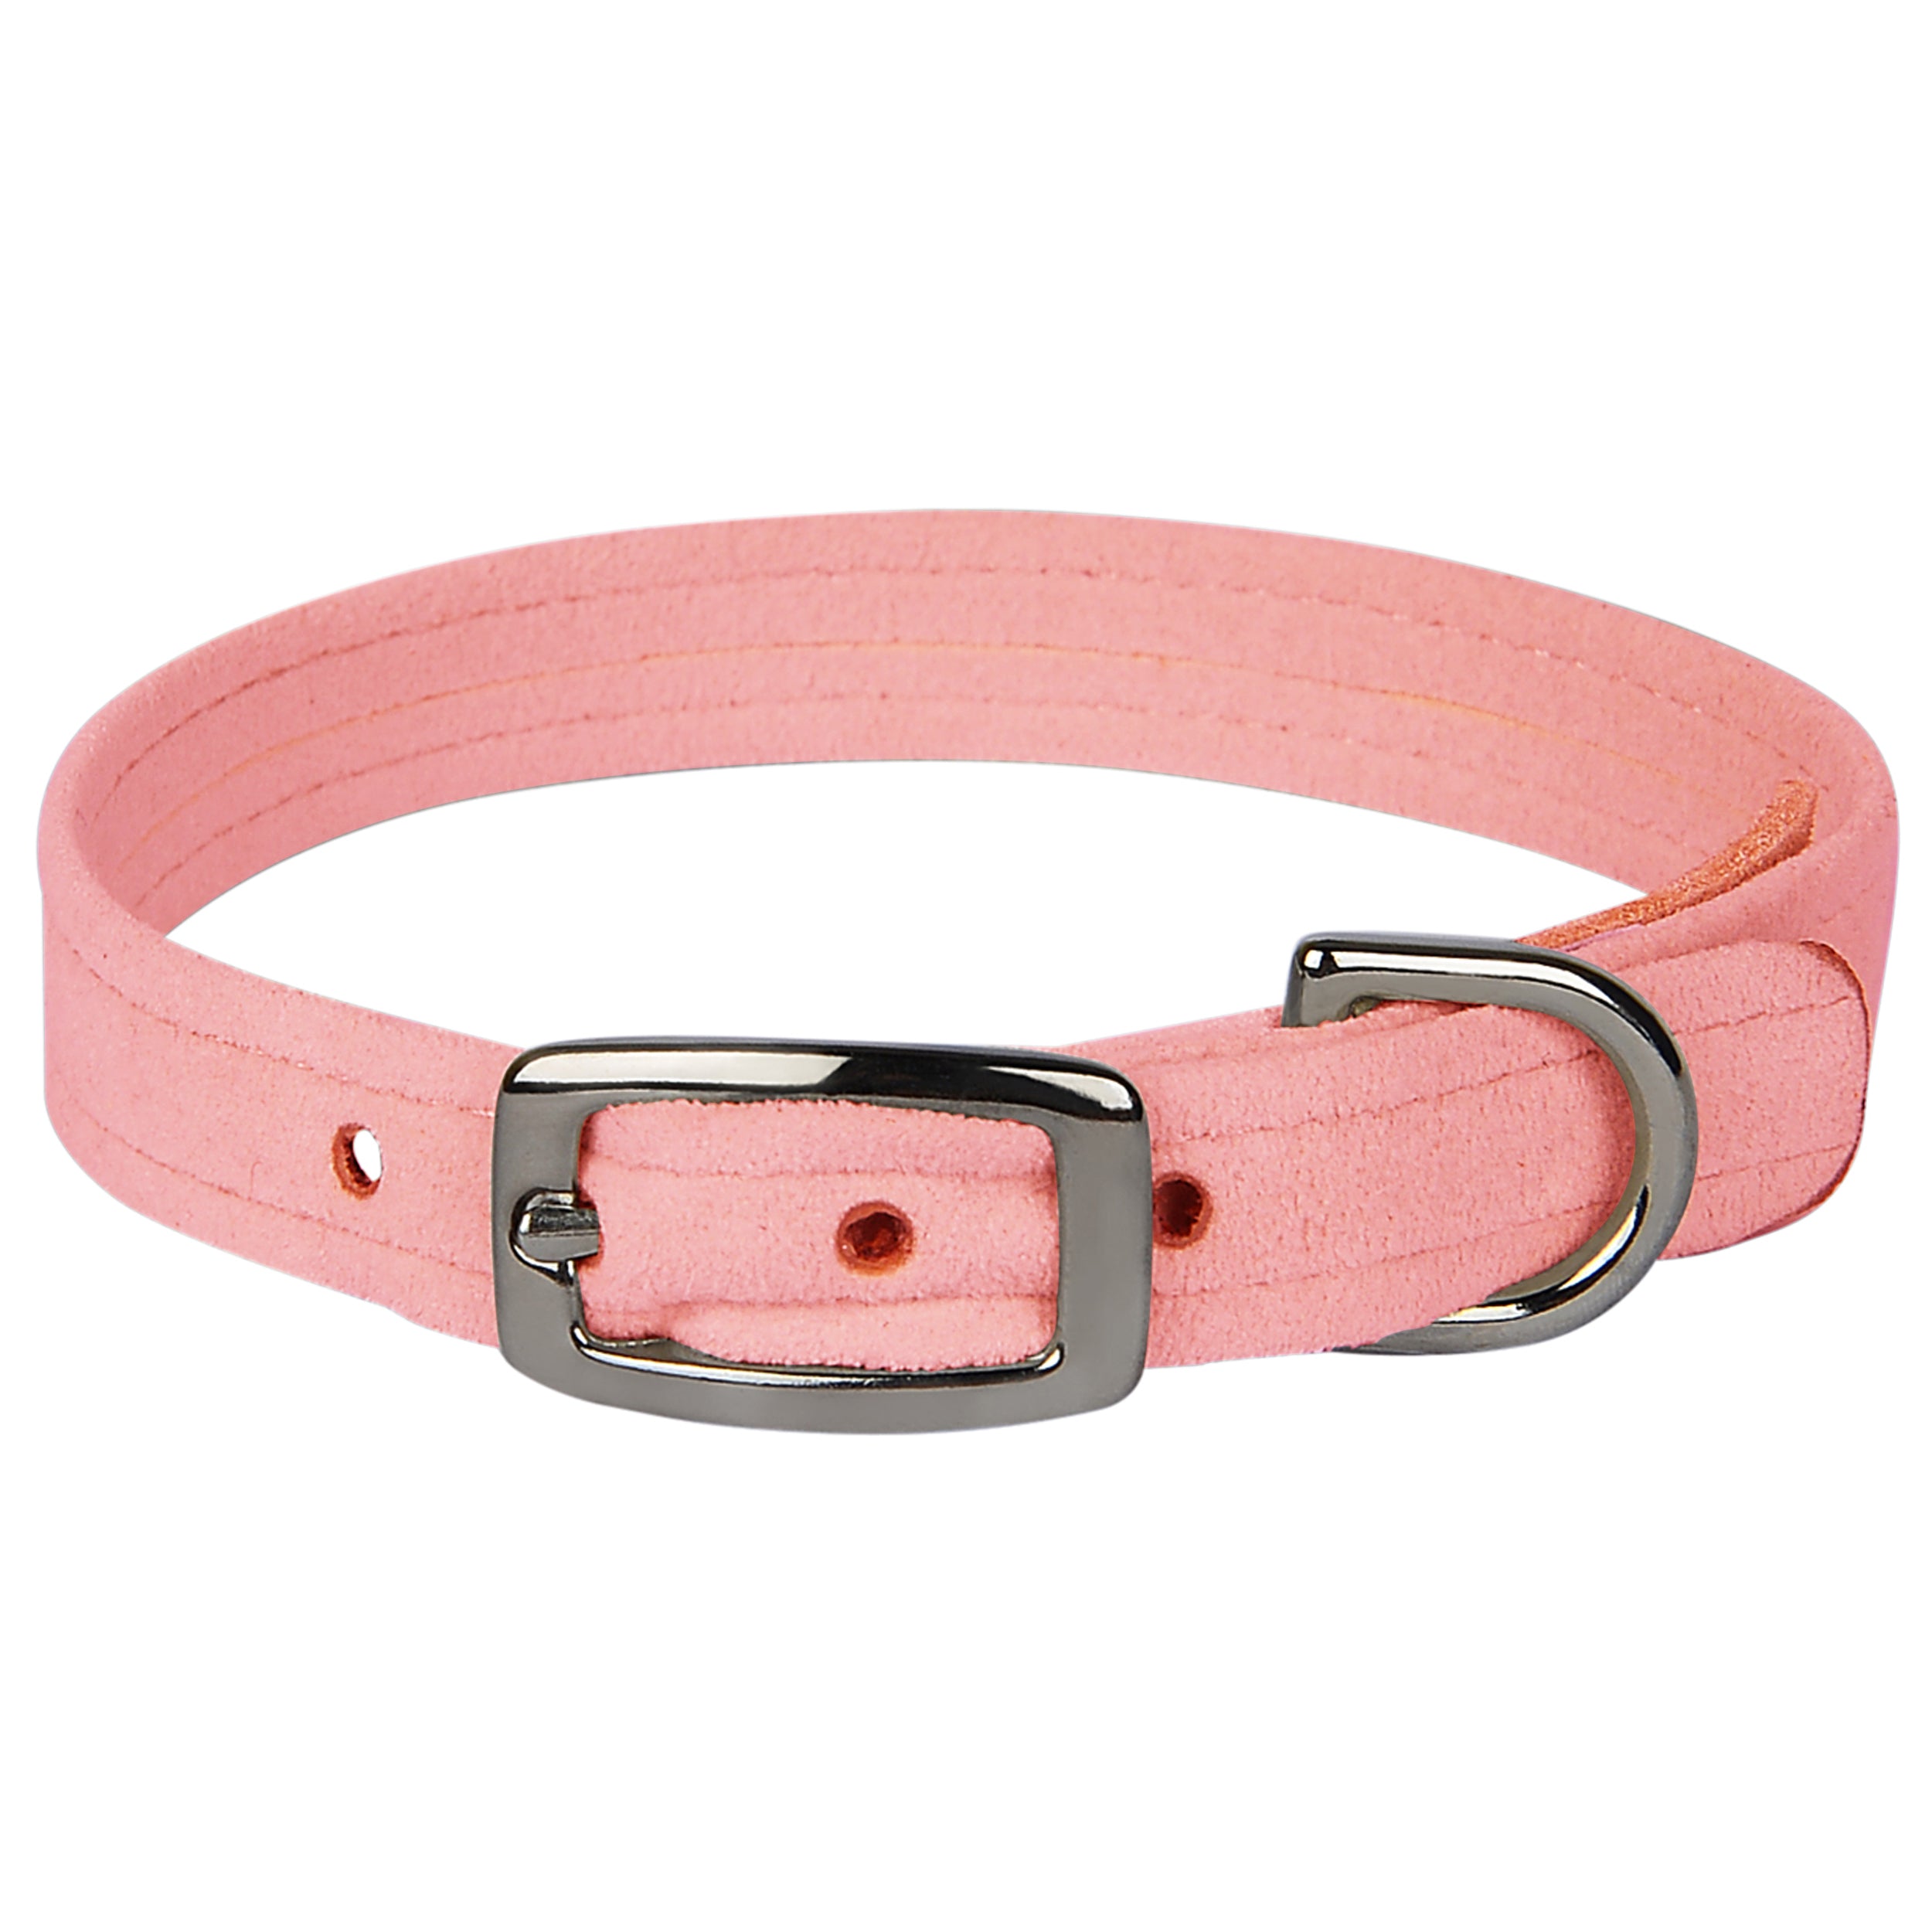 Clearance! 'Luca' Designer Dog Collar - Cute Fun Geometric Pink Pattern